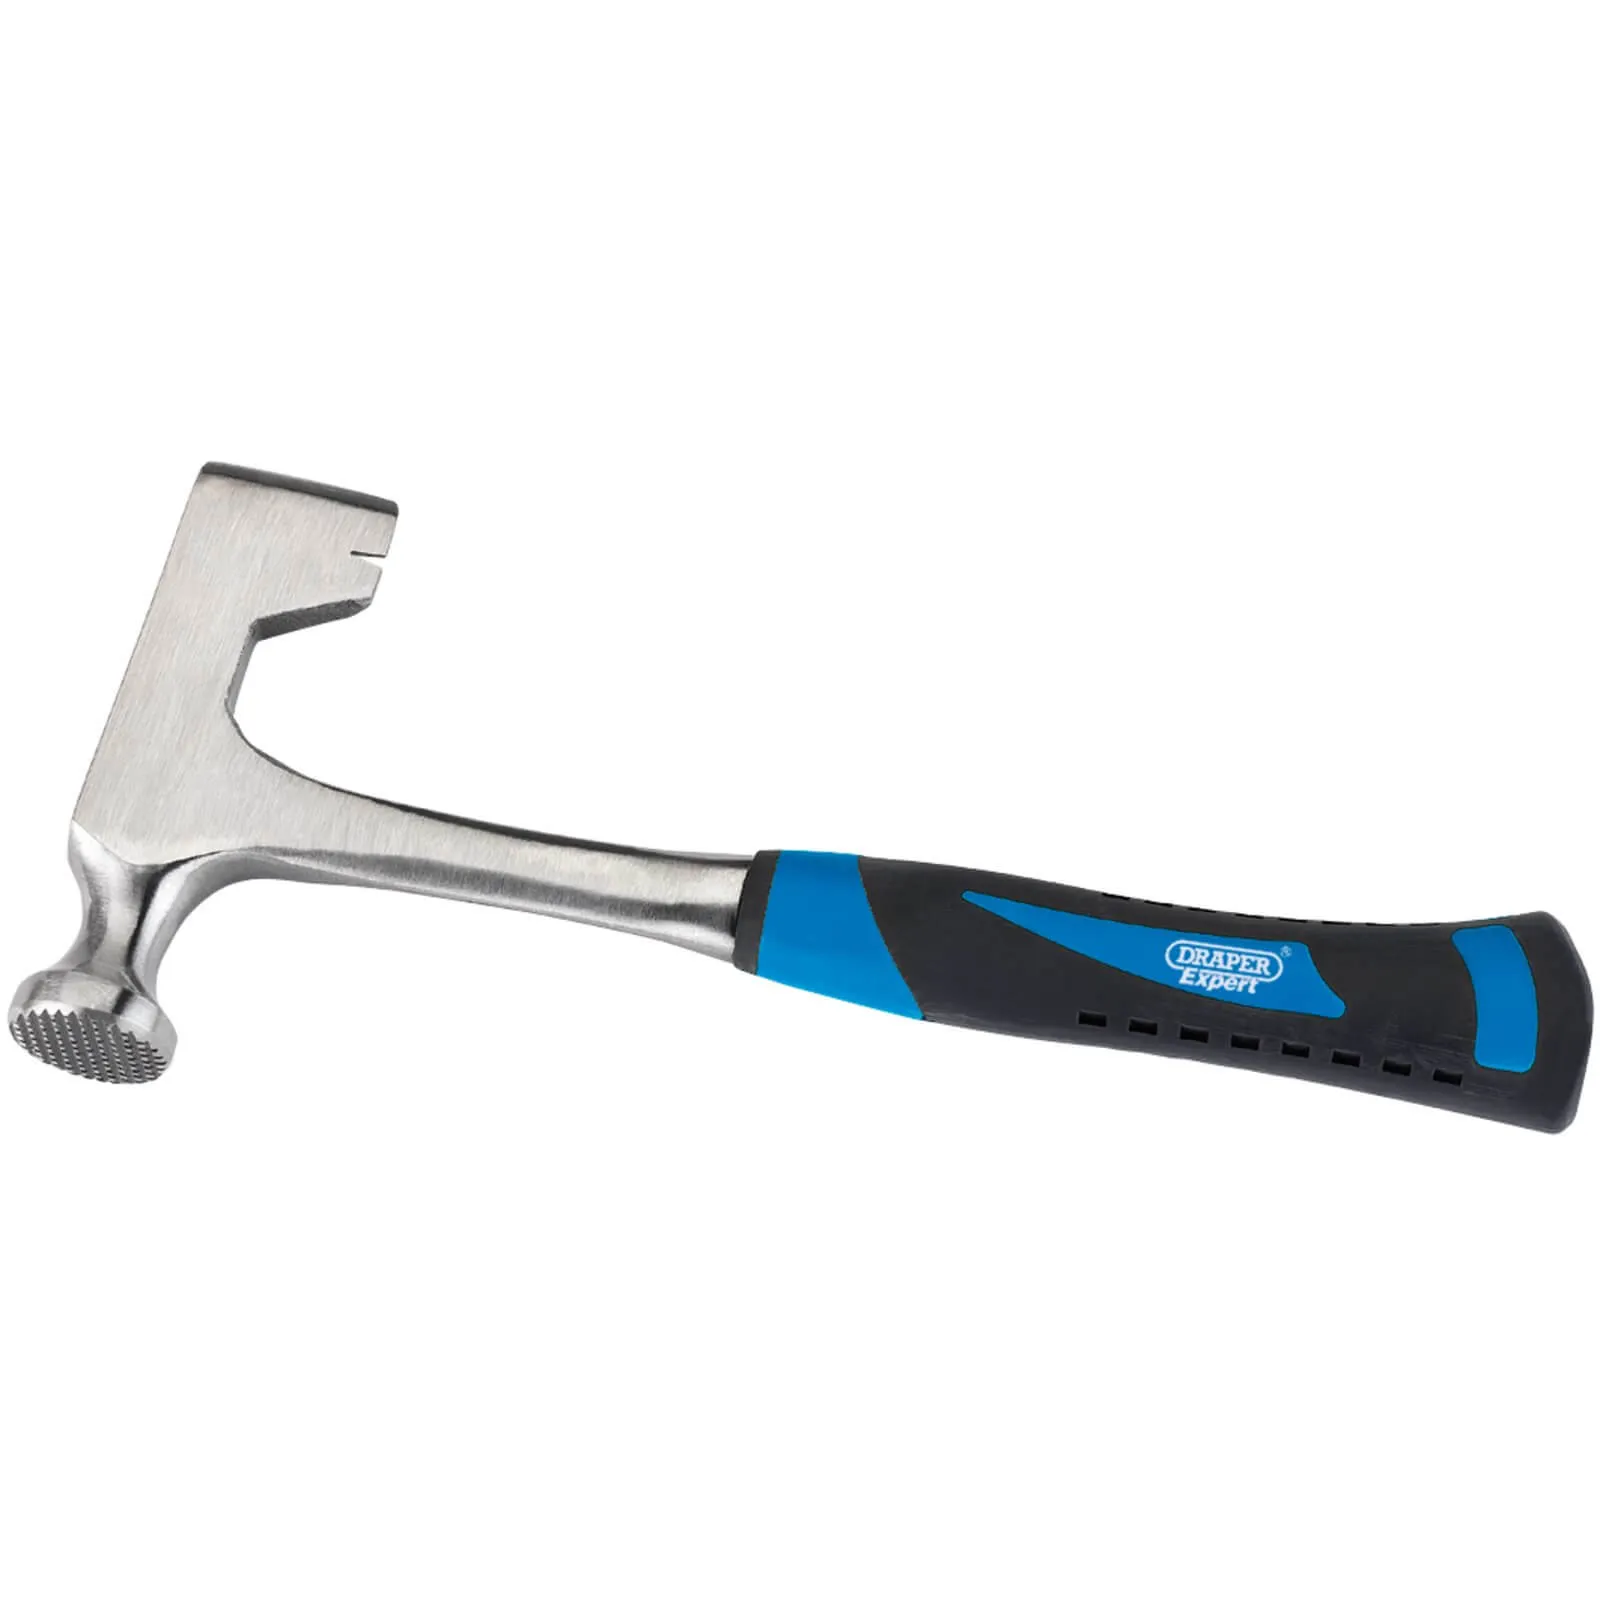 Draper Expert Soft Grip Drywall Hammer - 400g